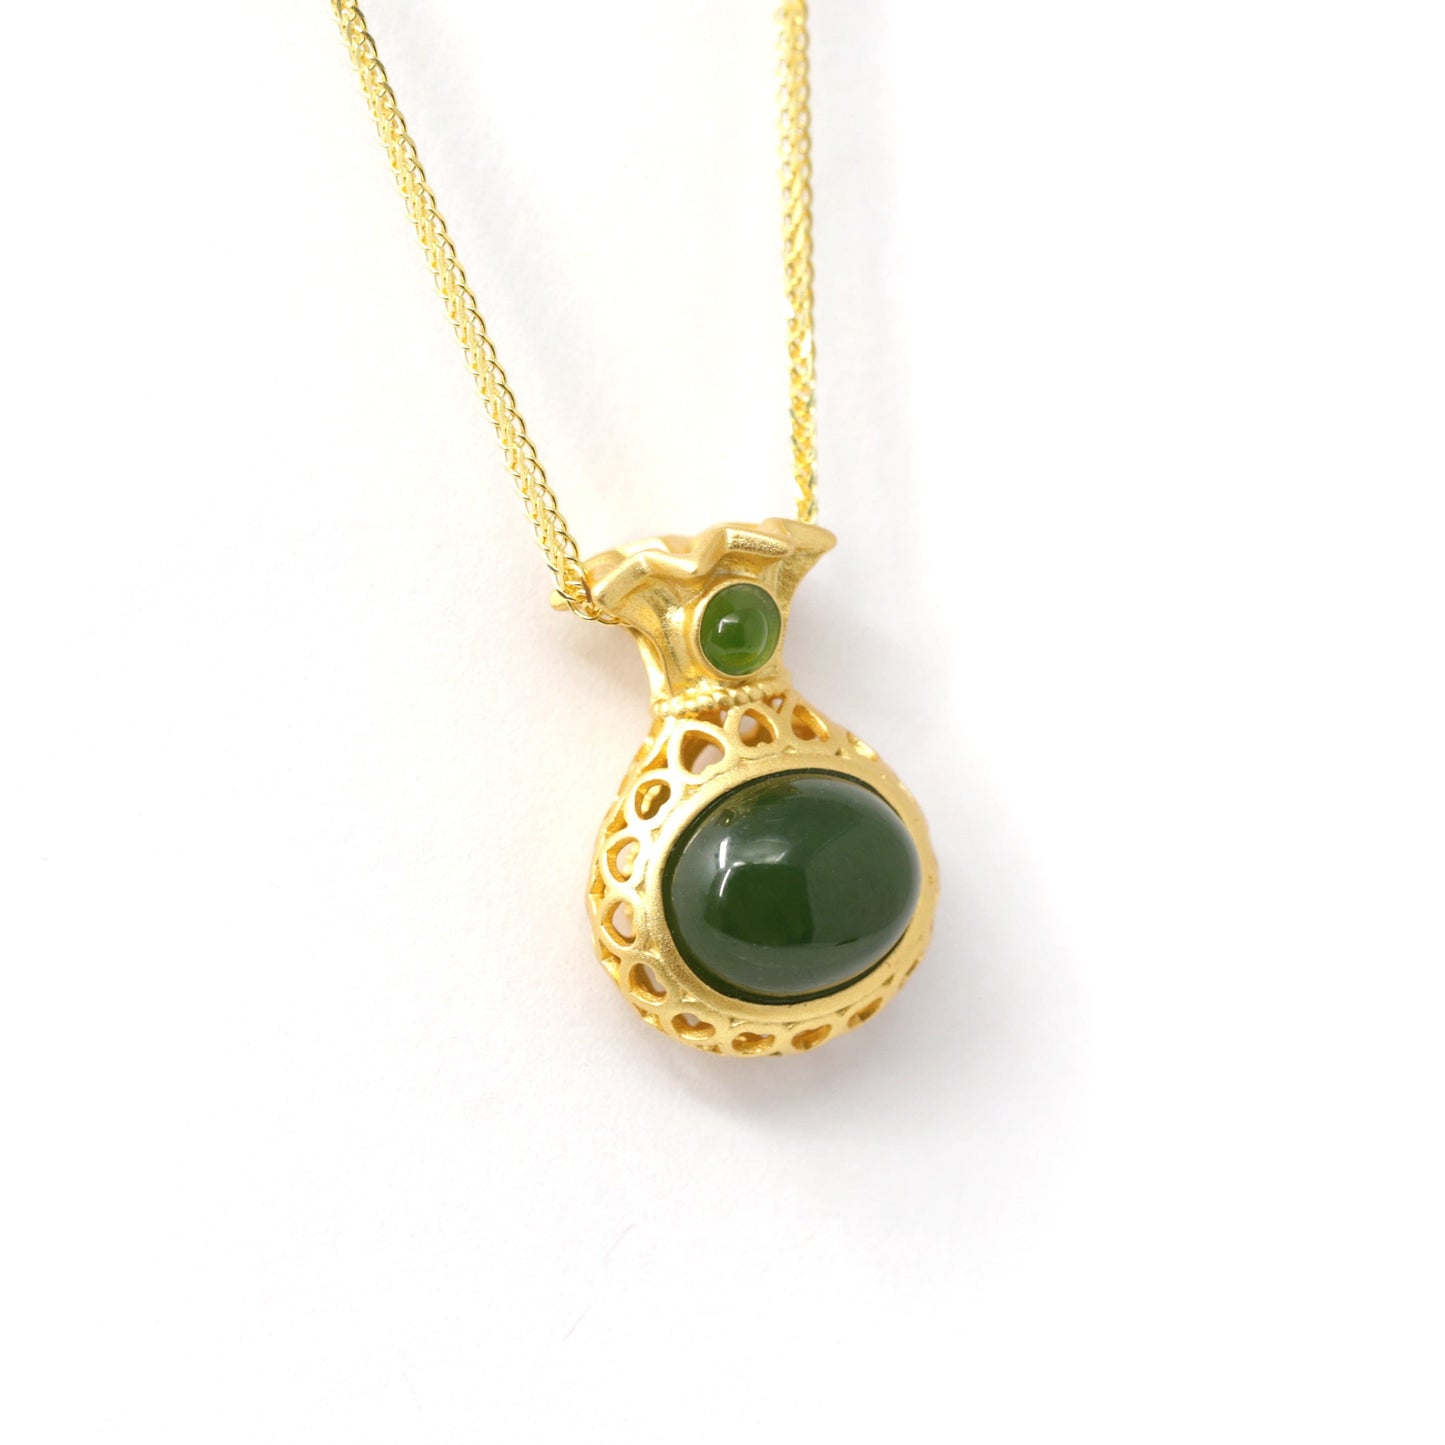 RealJade® Co. Jade Pendant Necklace   "Lucky Oval Jade" Sterling Silver Nephrite Green Jade Classic Pendant Necklace